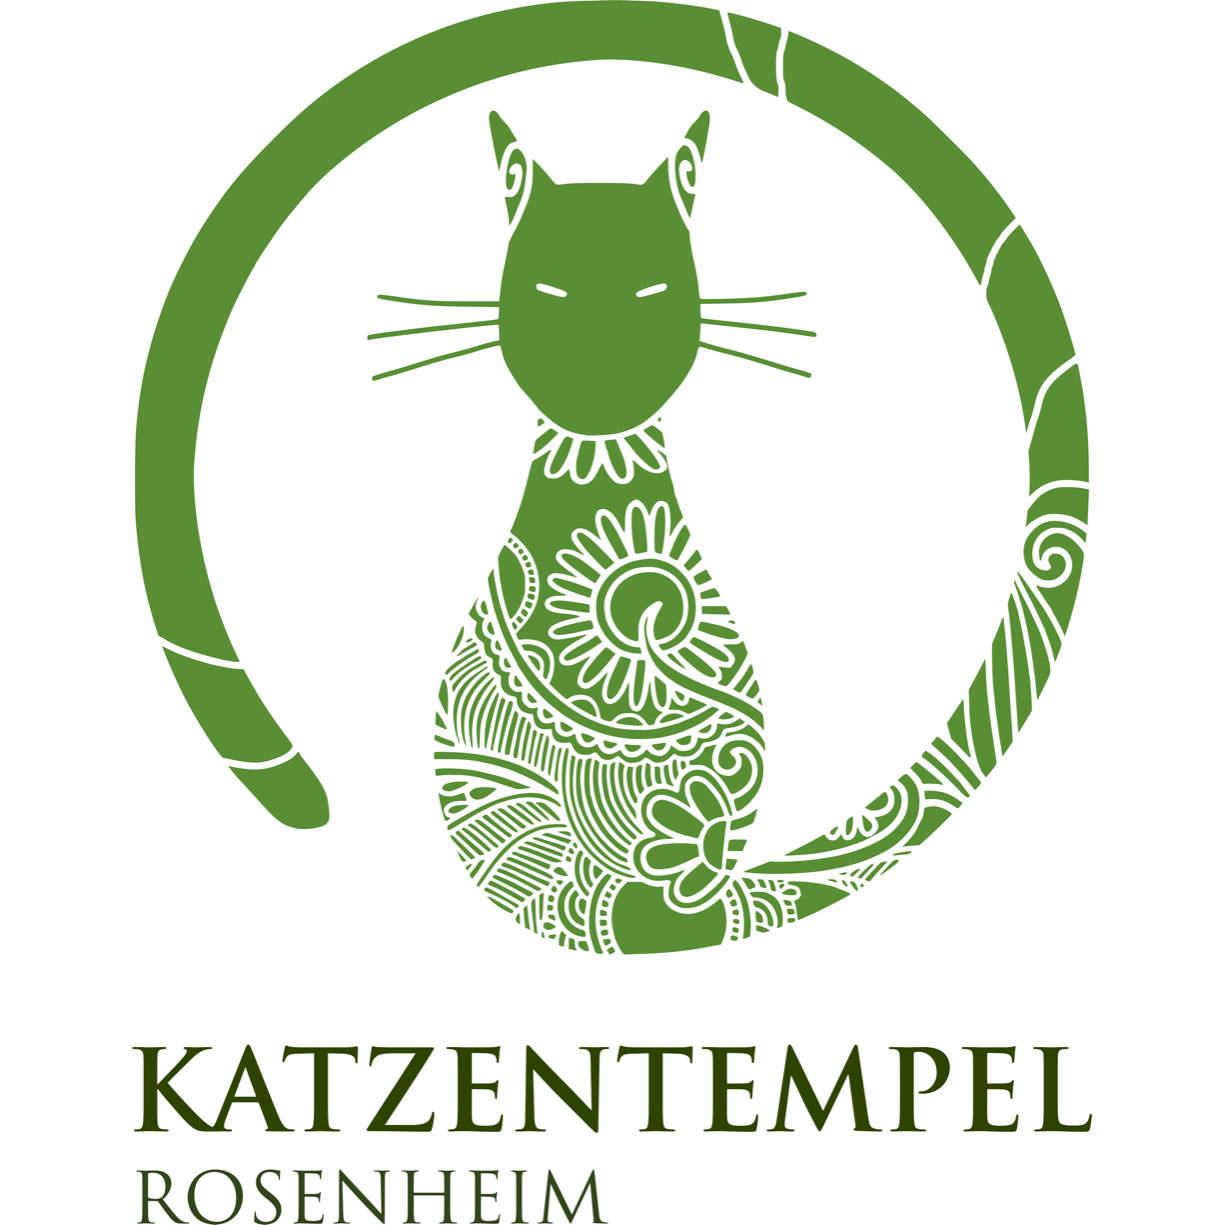 Katzentempel Rosenheim in Rosenheim in Oberbayern - Logo